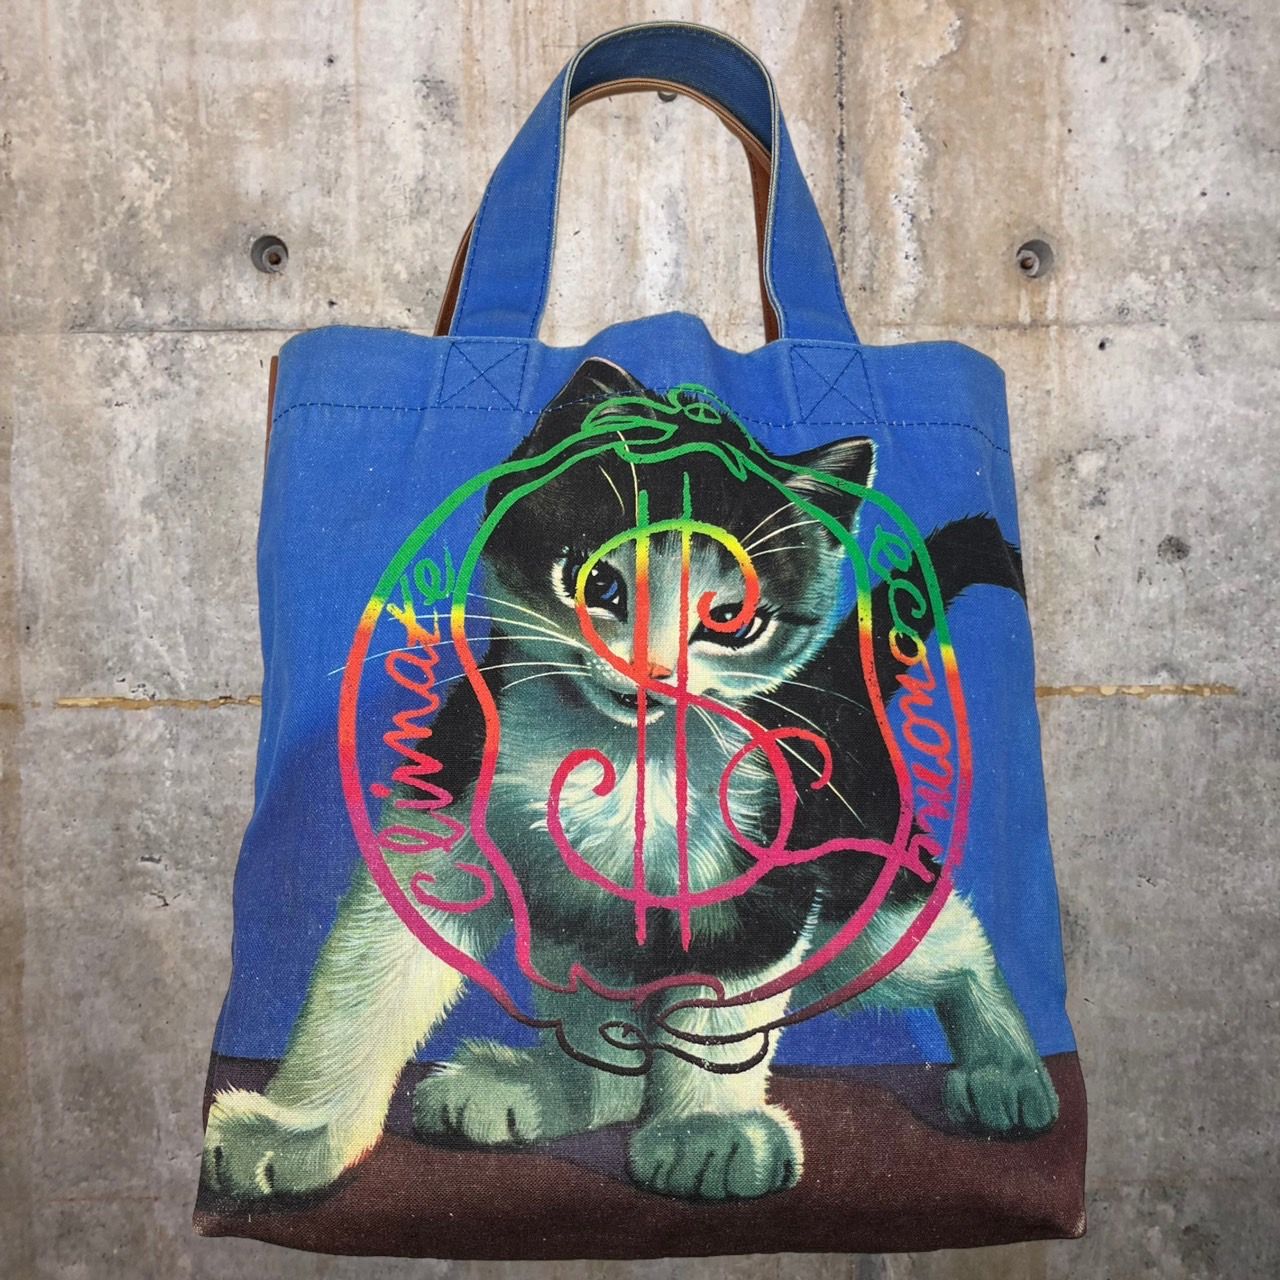 Vivienne Westwood(ヴィヴィアンウエストウッド) Kitten tote bag ...